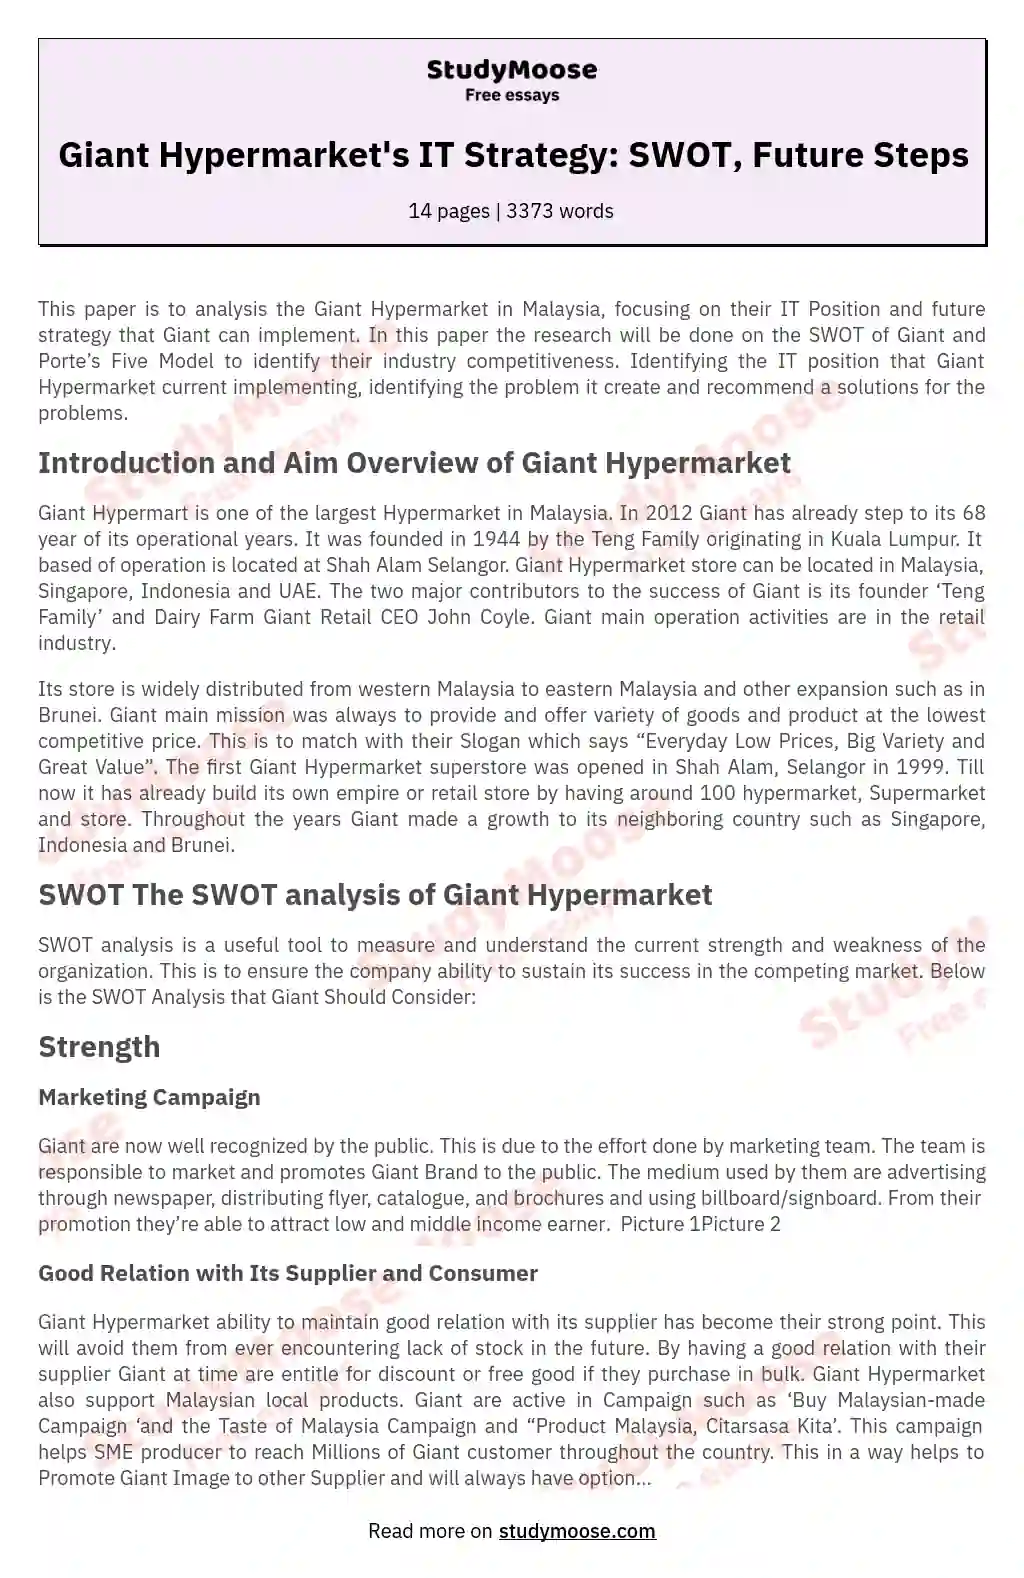 Giant Hypermarket's IT Strategy: SWOT, Future Steps essay